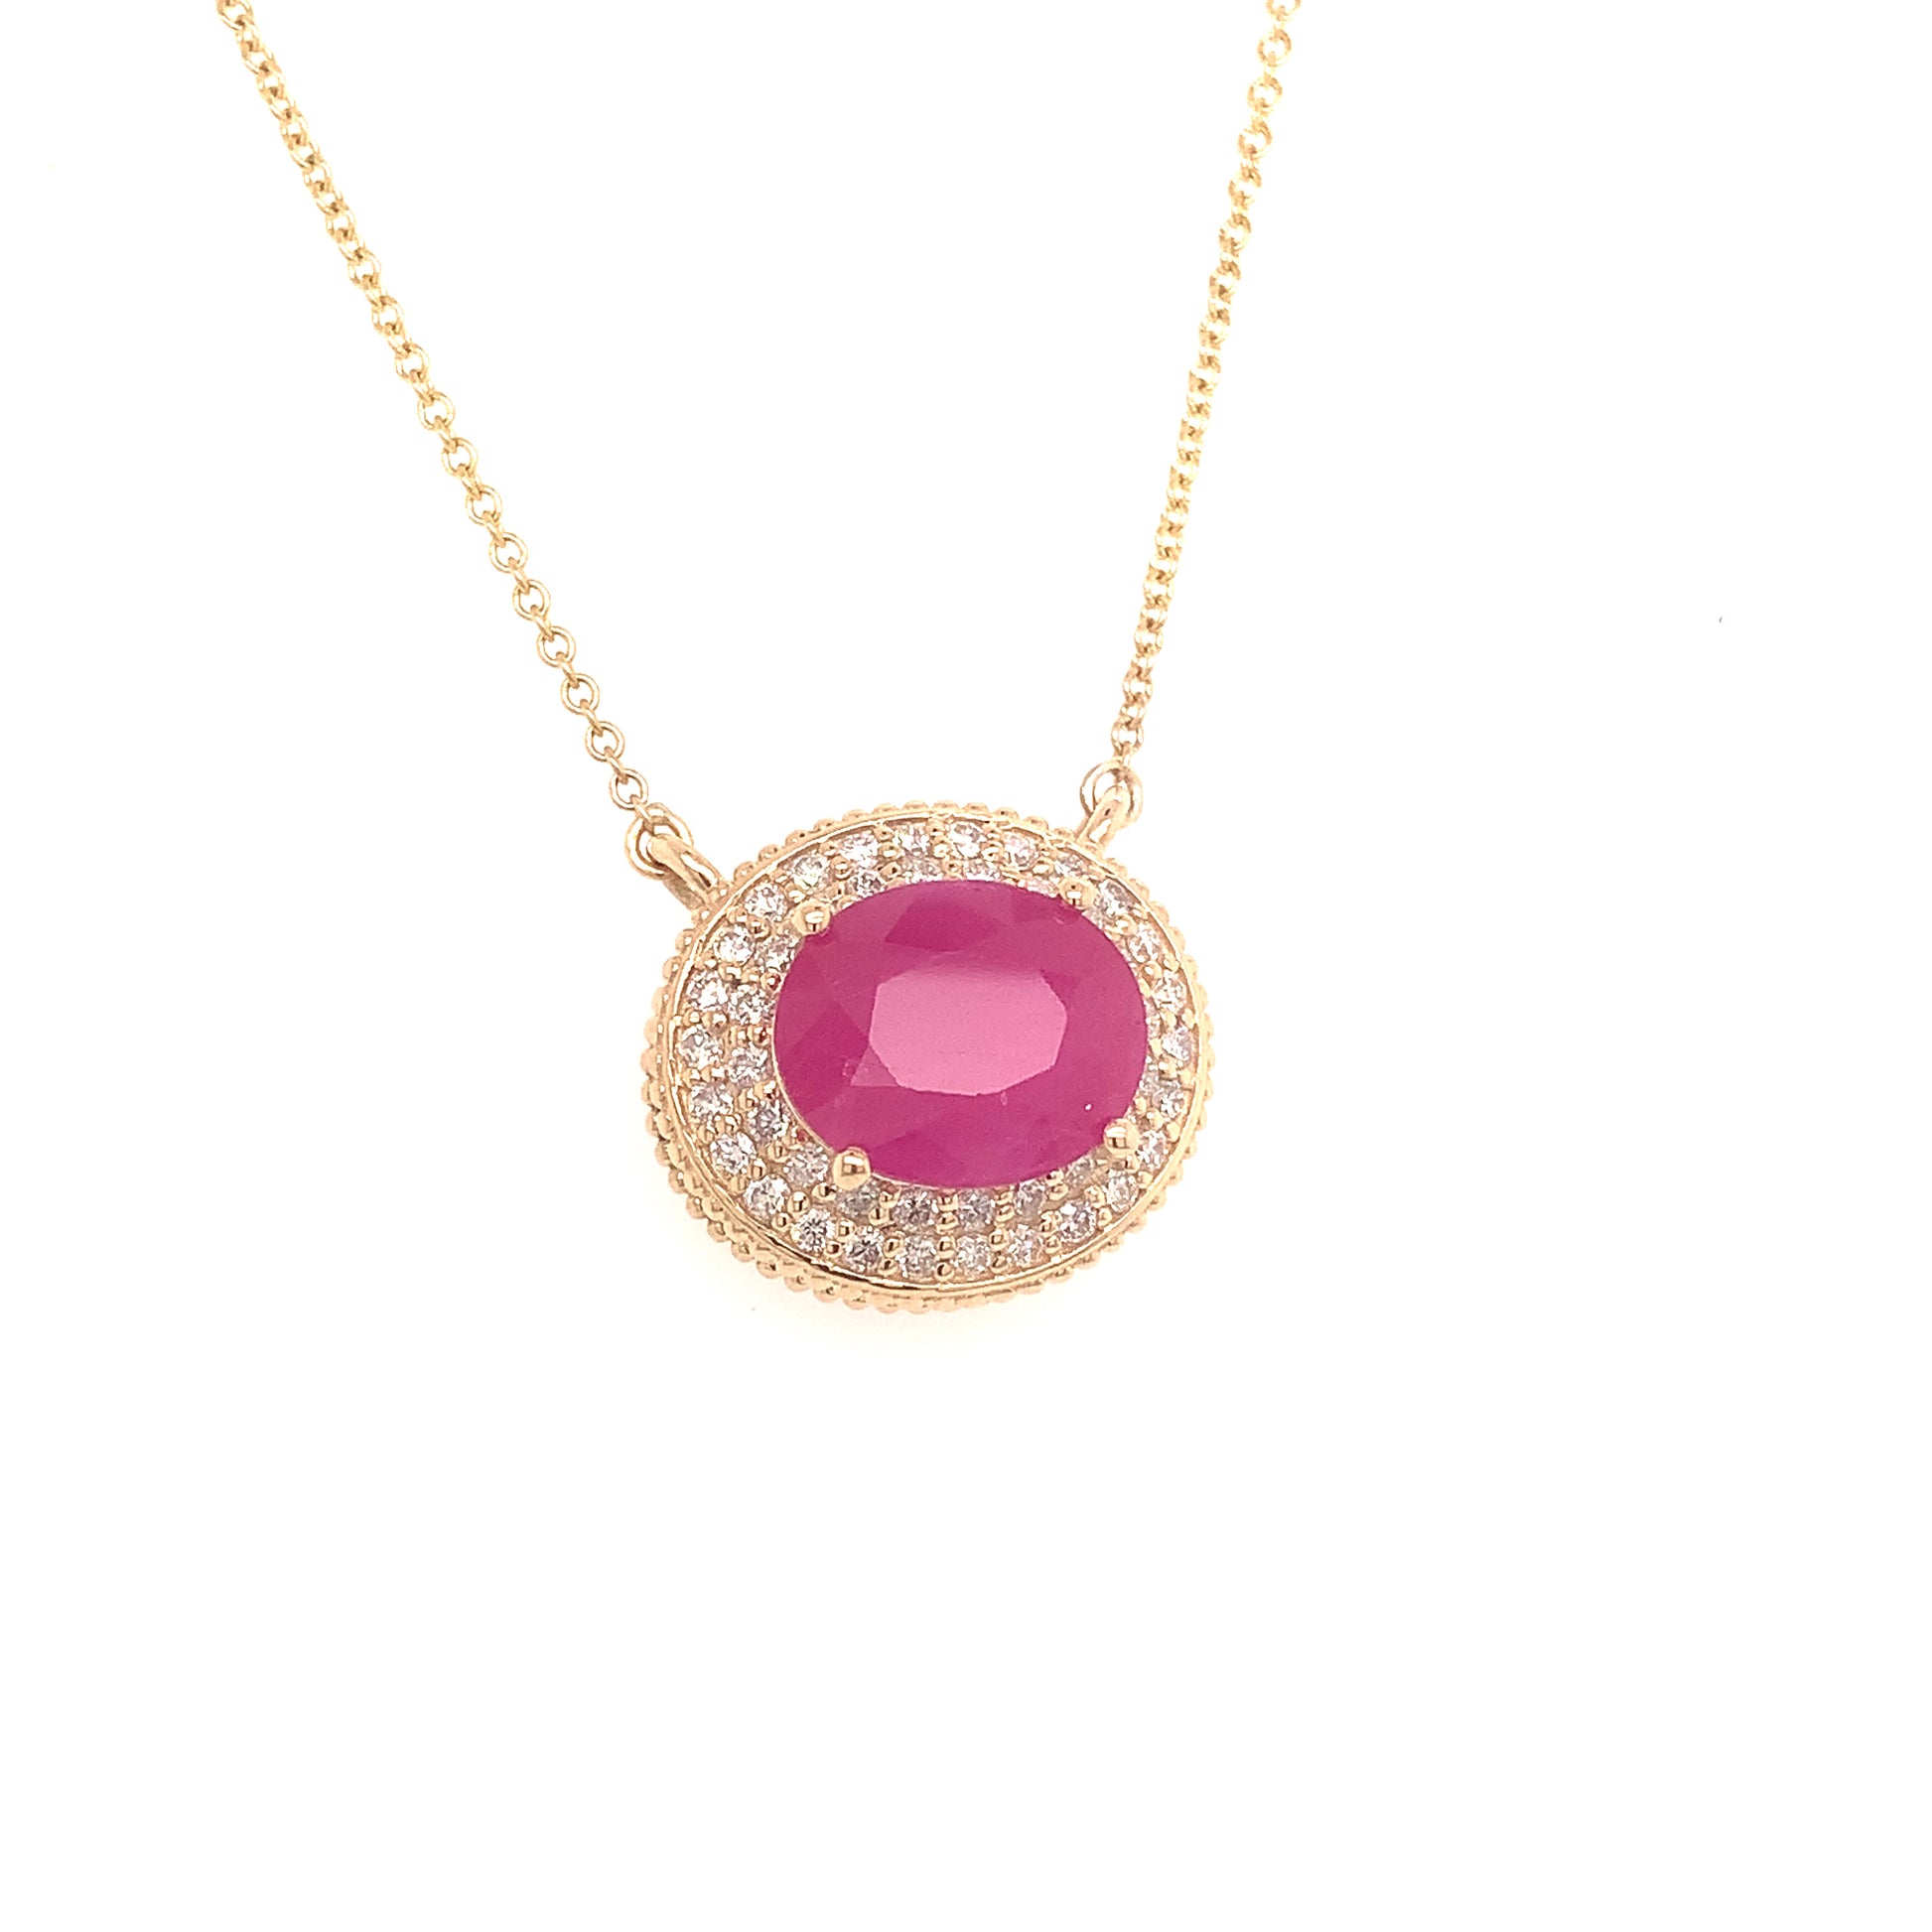 Ruby Diamond Necklace 14k Gold 18" 5.06 TCW Certified $5,975 121097 - Certified Estate Jewelry